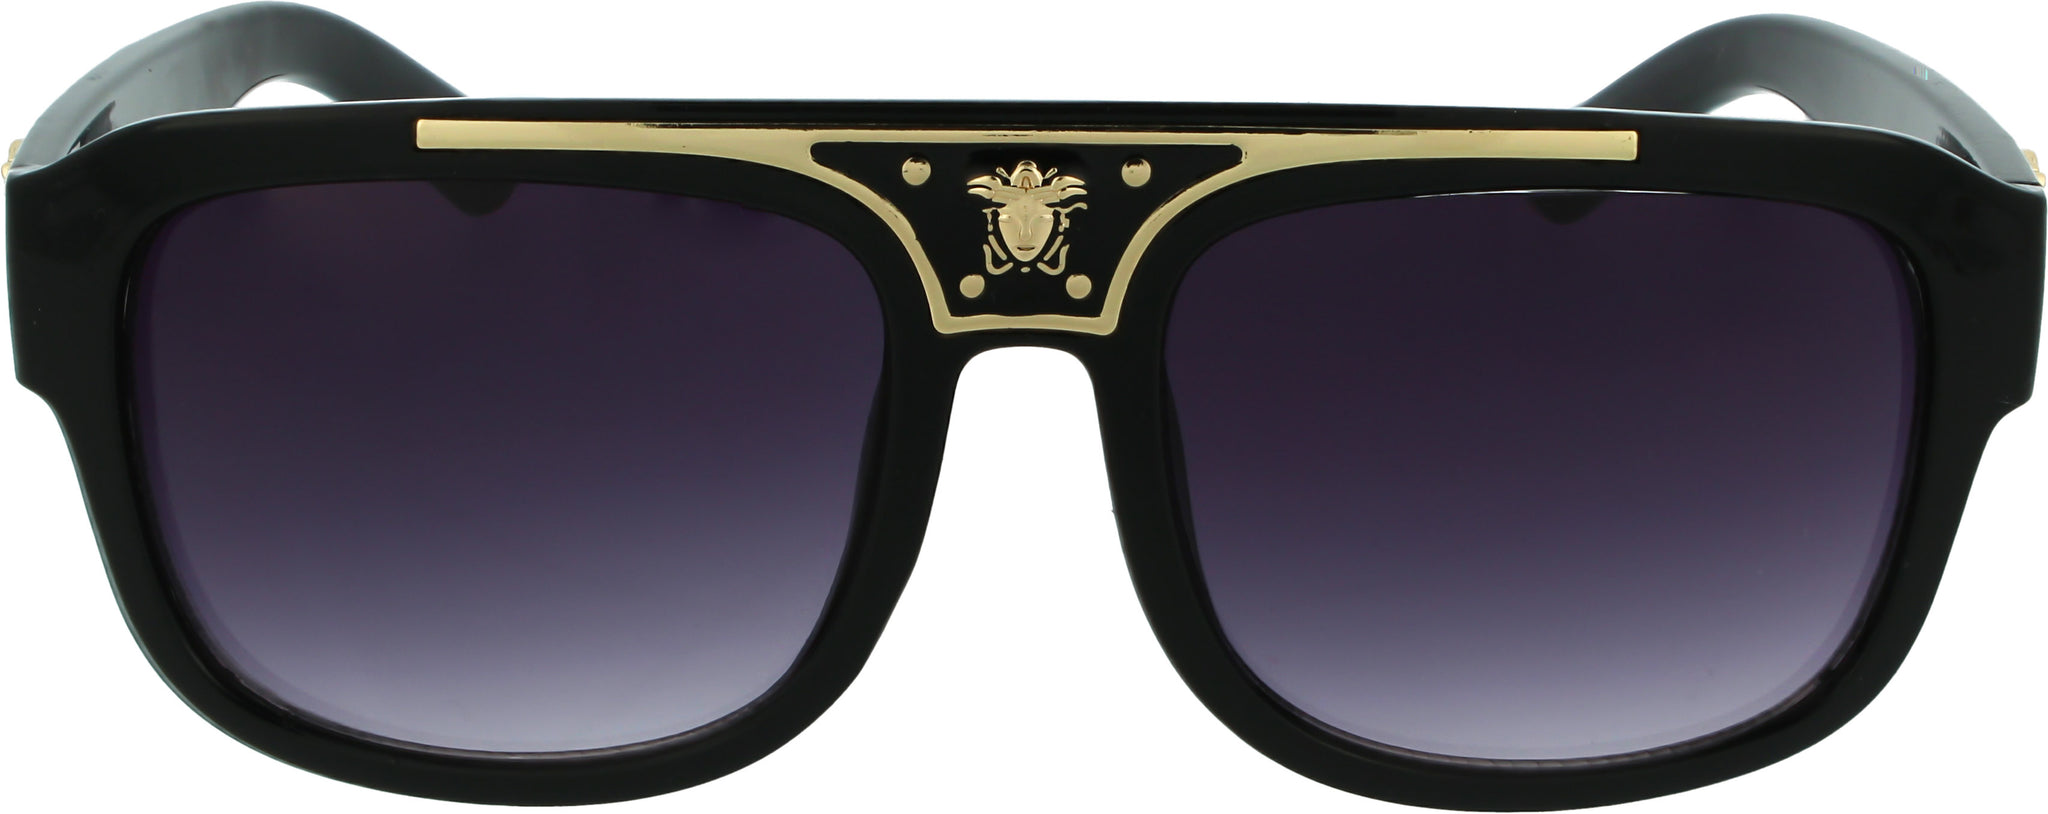 Semi-Round V Look Sunglasses | Unified Double Bridge | 100% UV Protection | 3309 Black & Gold w/ Smoke Lens